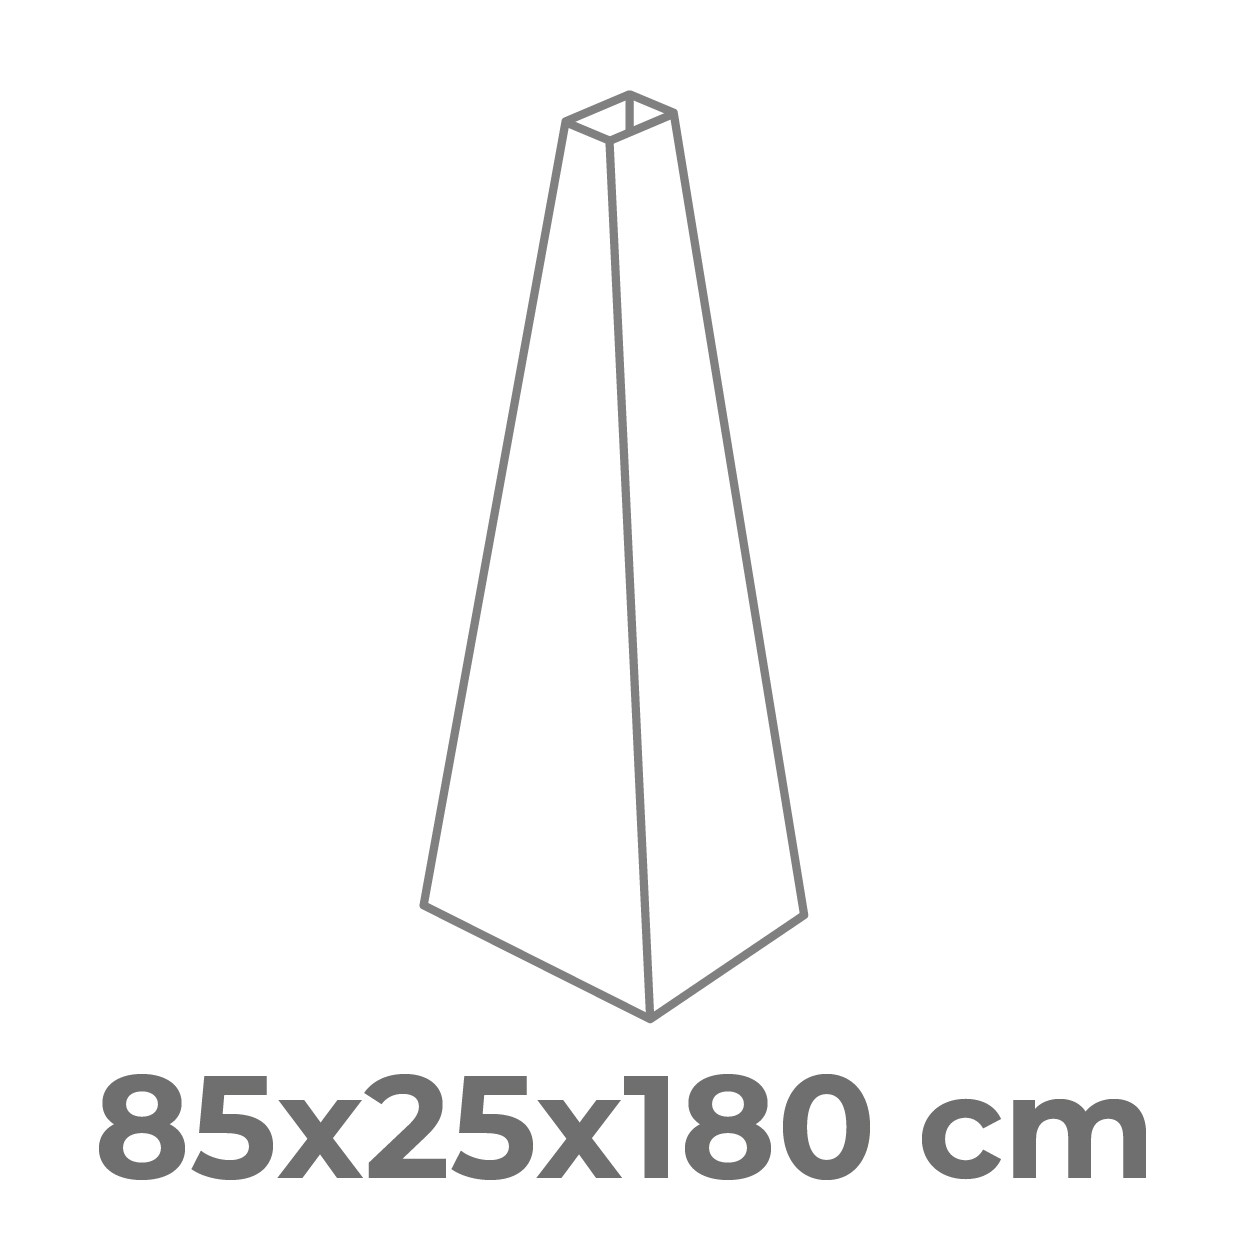 Piramidale grande - 85x25x180 cm